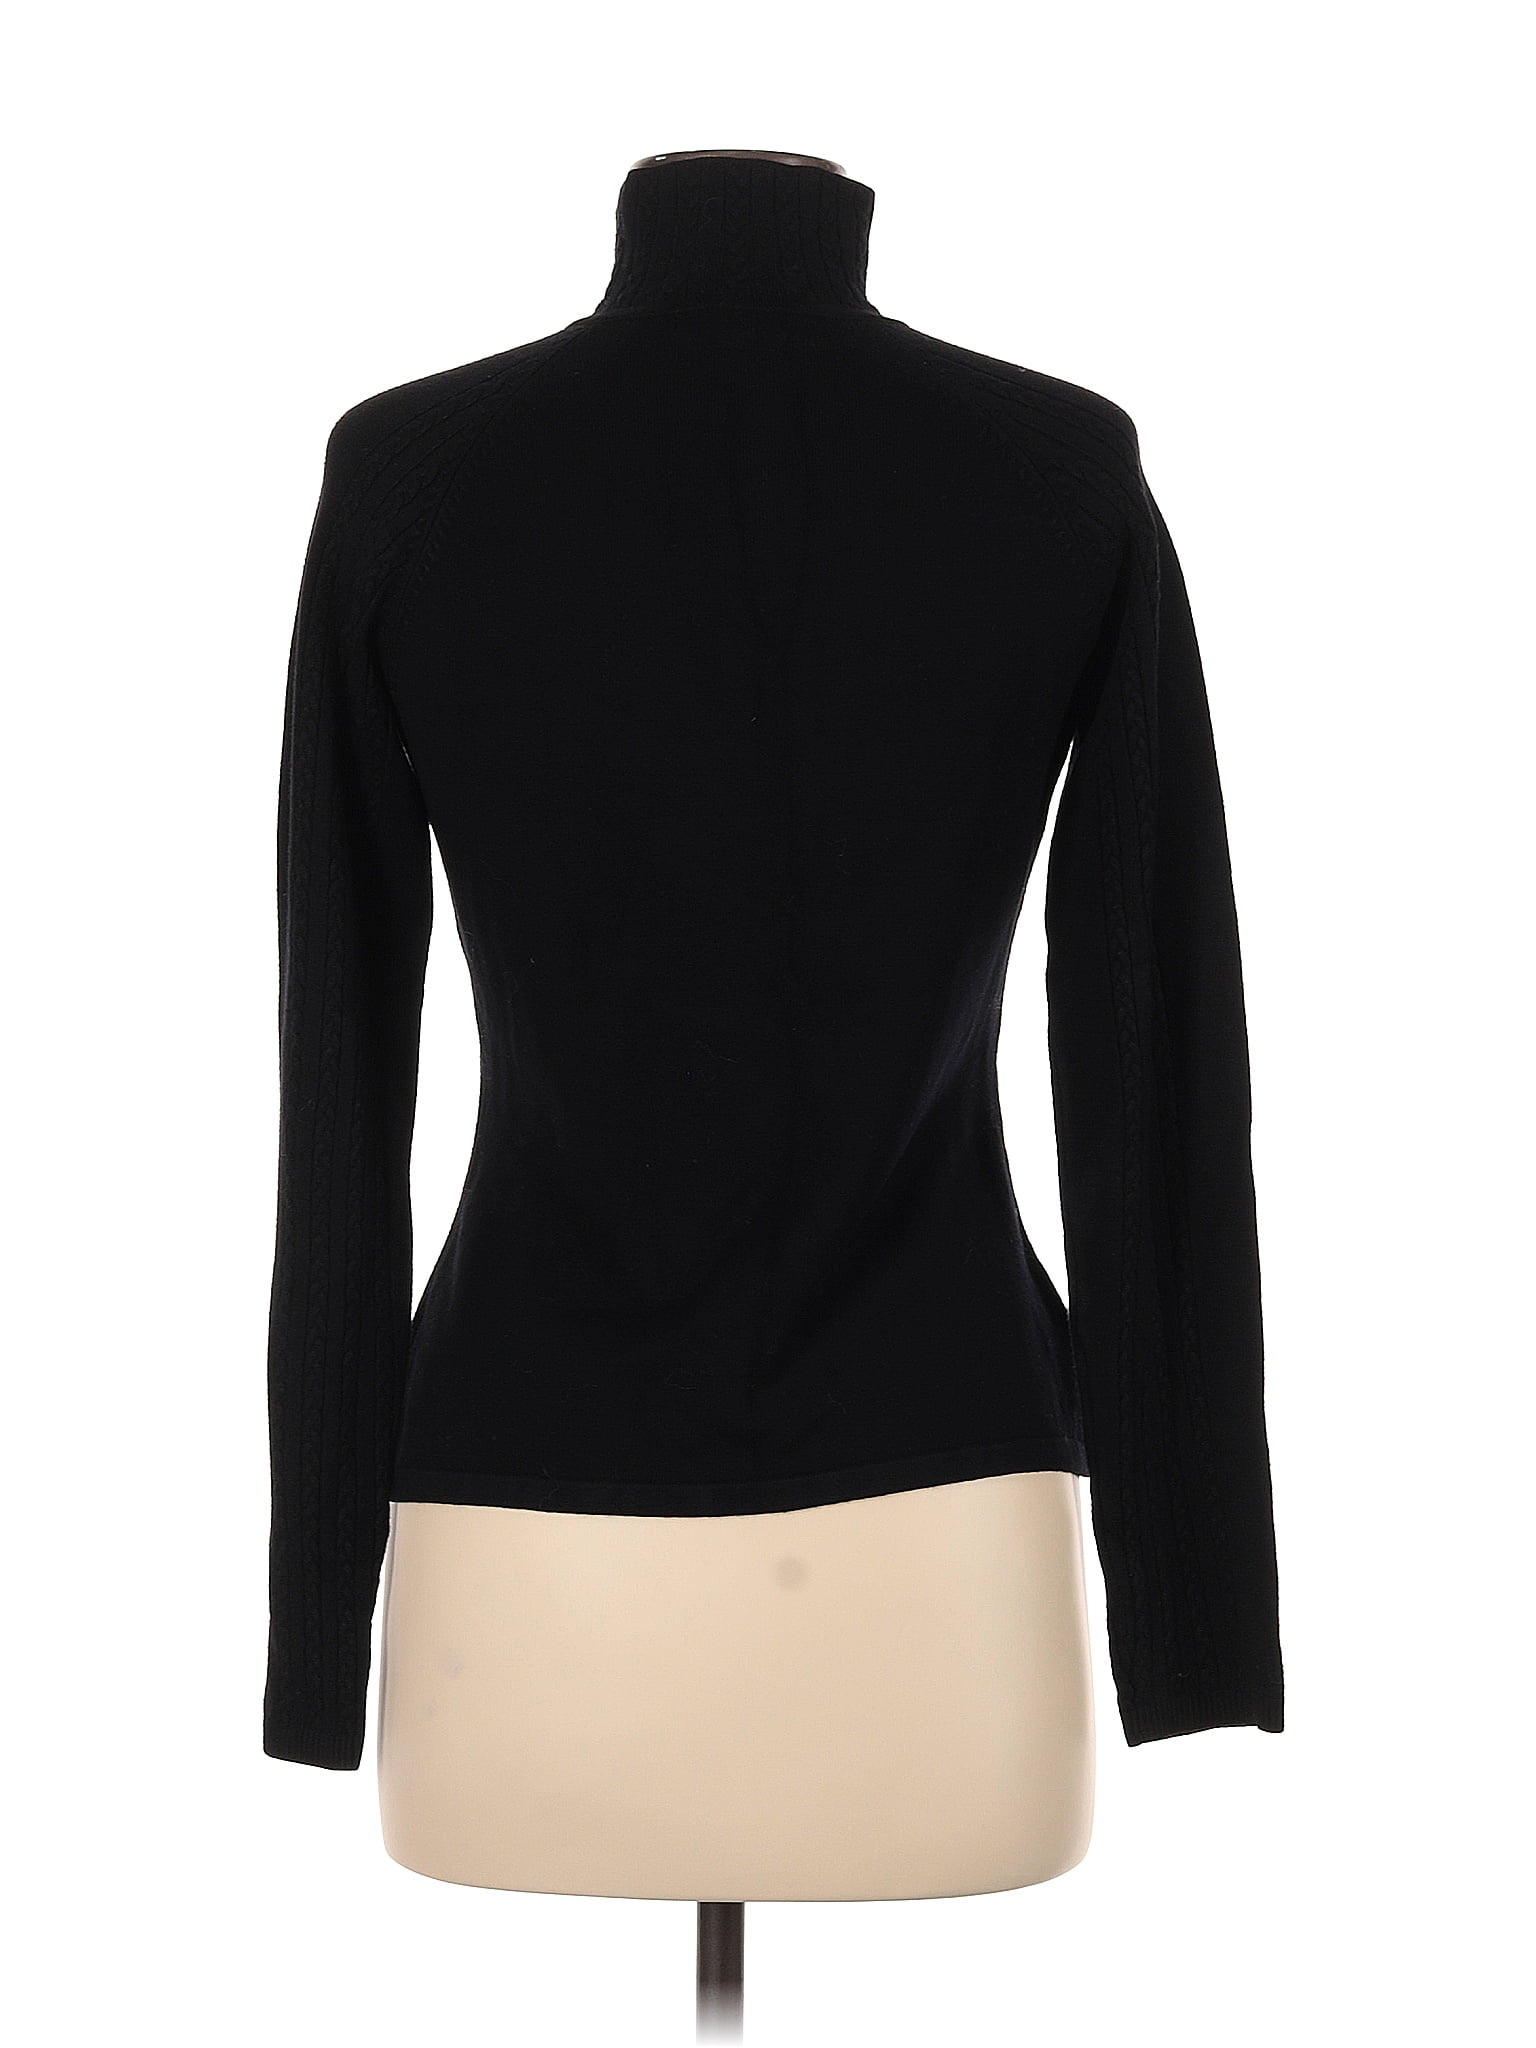 NILS Sportswear Color Block Solid Black Turtleneck Sweater Size M - 76% off